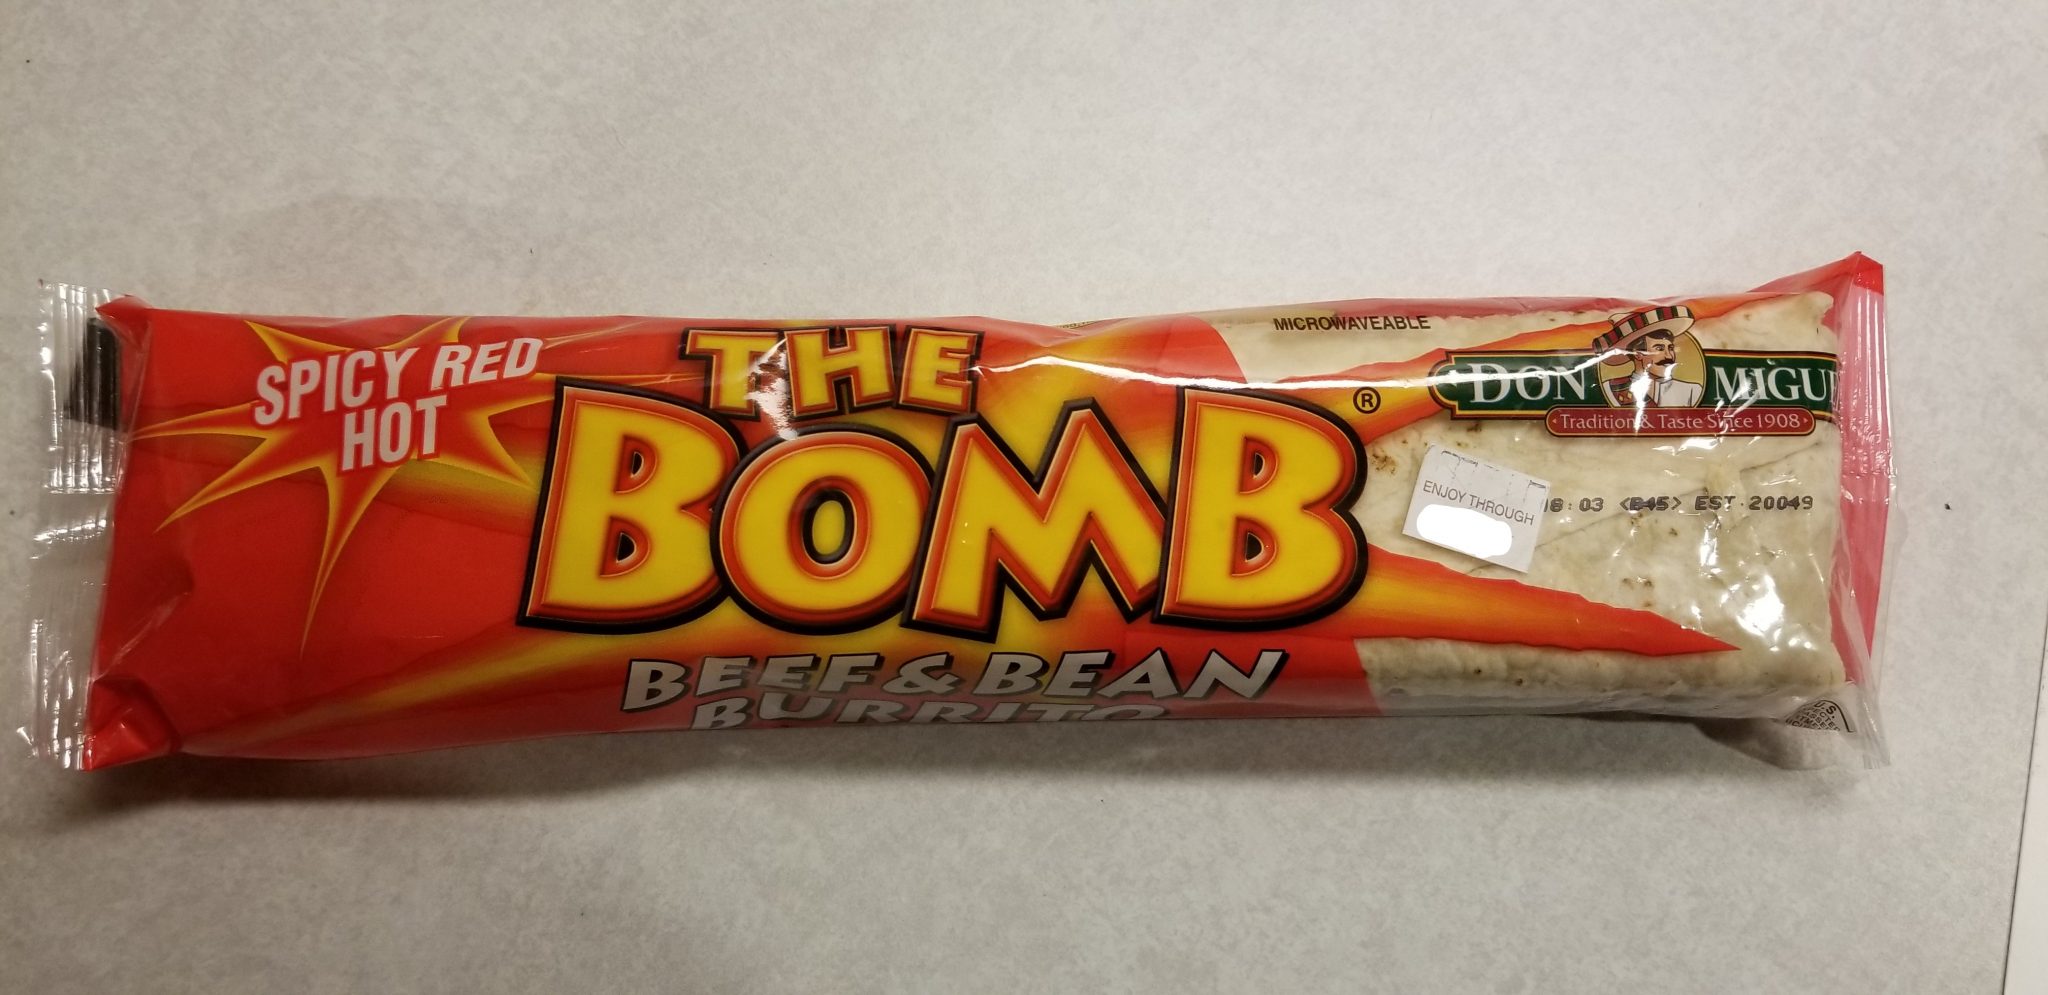 The Bomb Hot